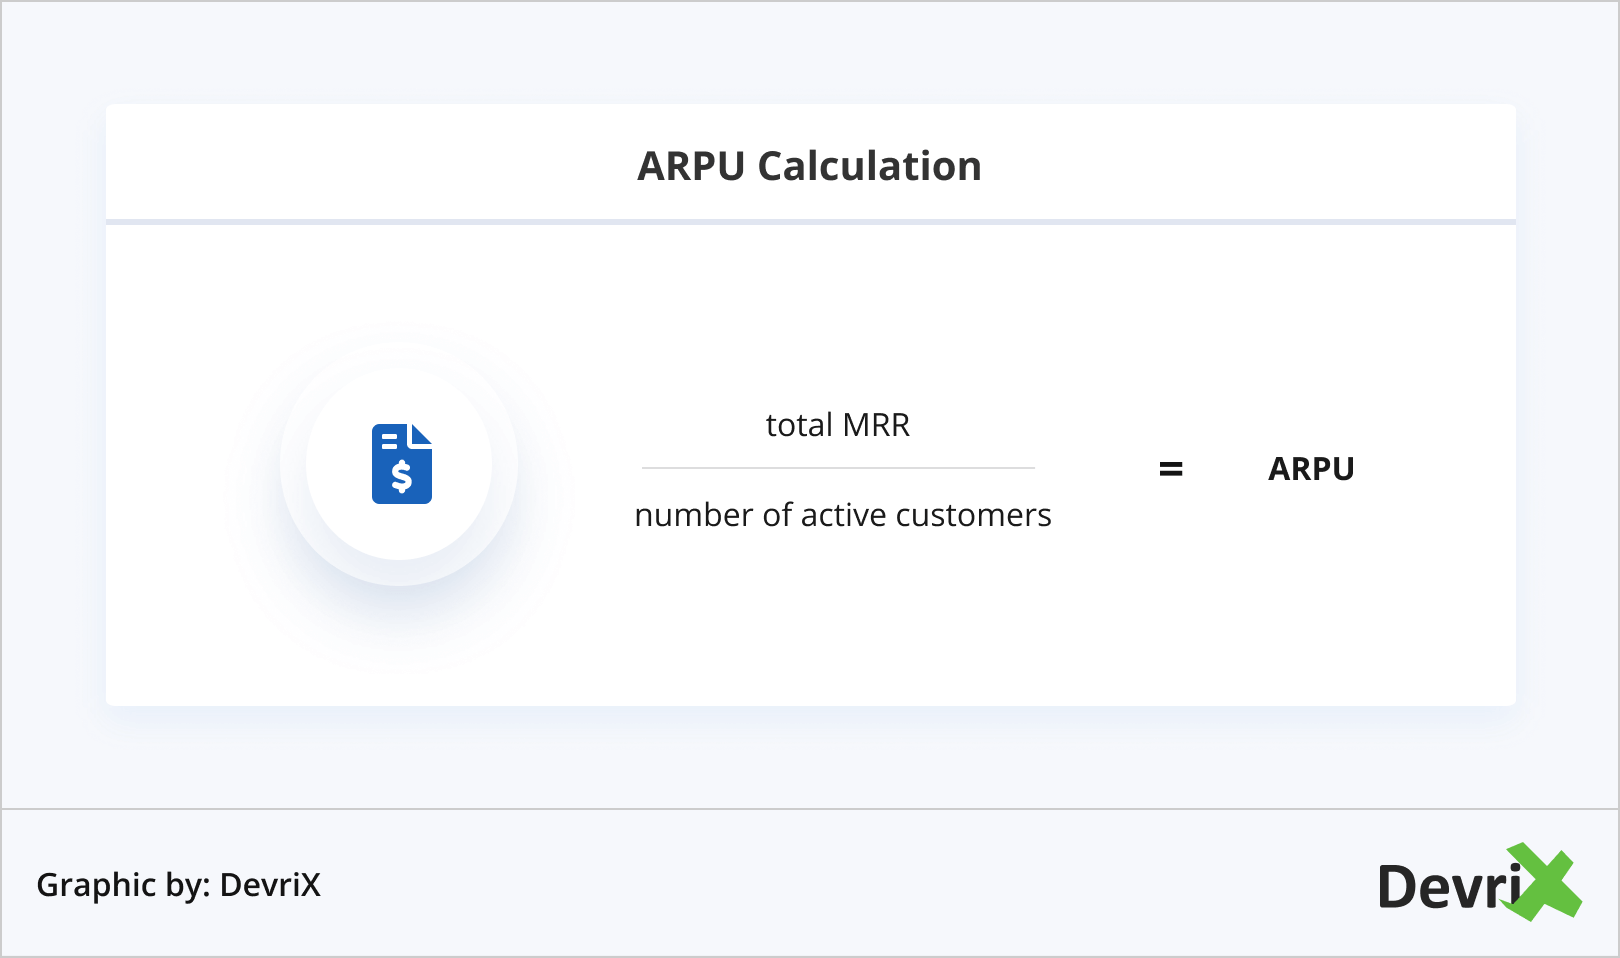 ARPU calculation